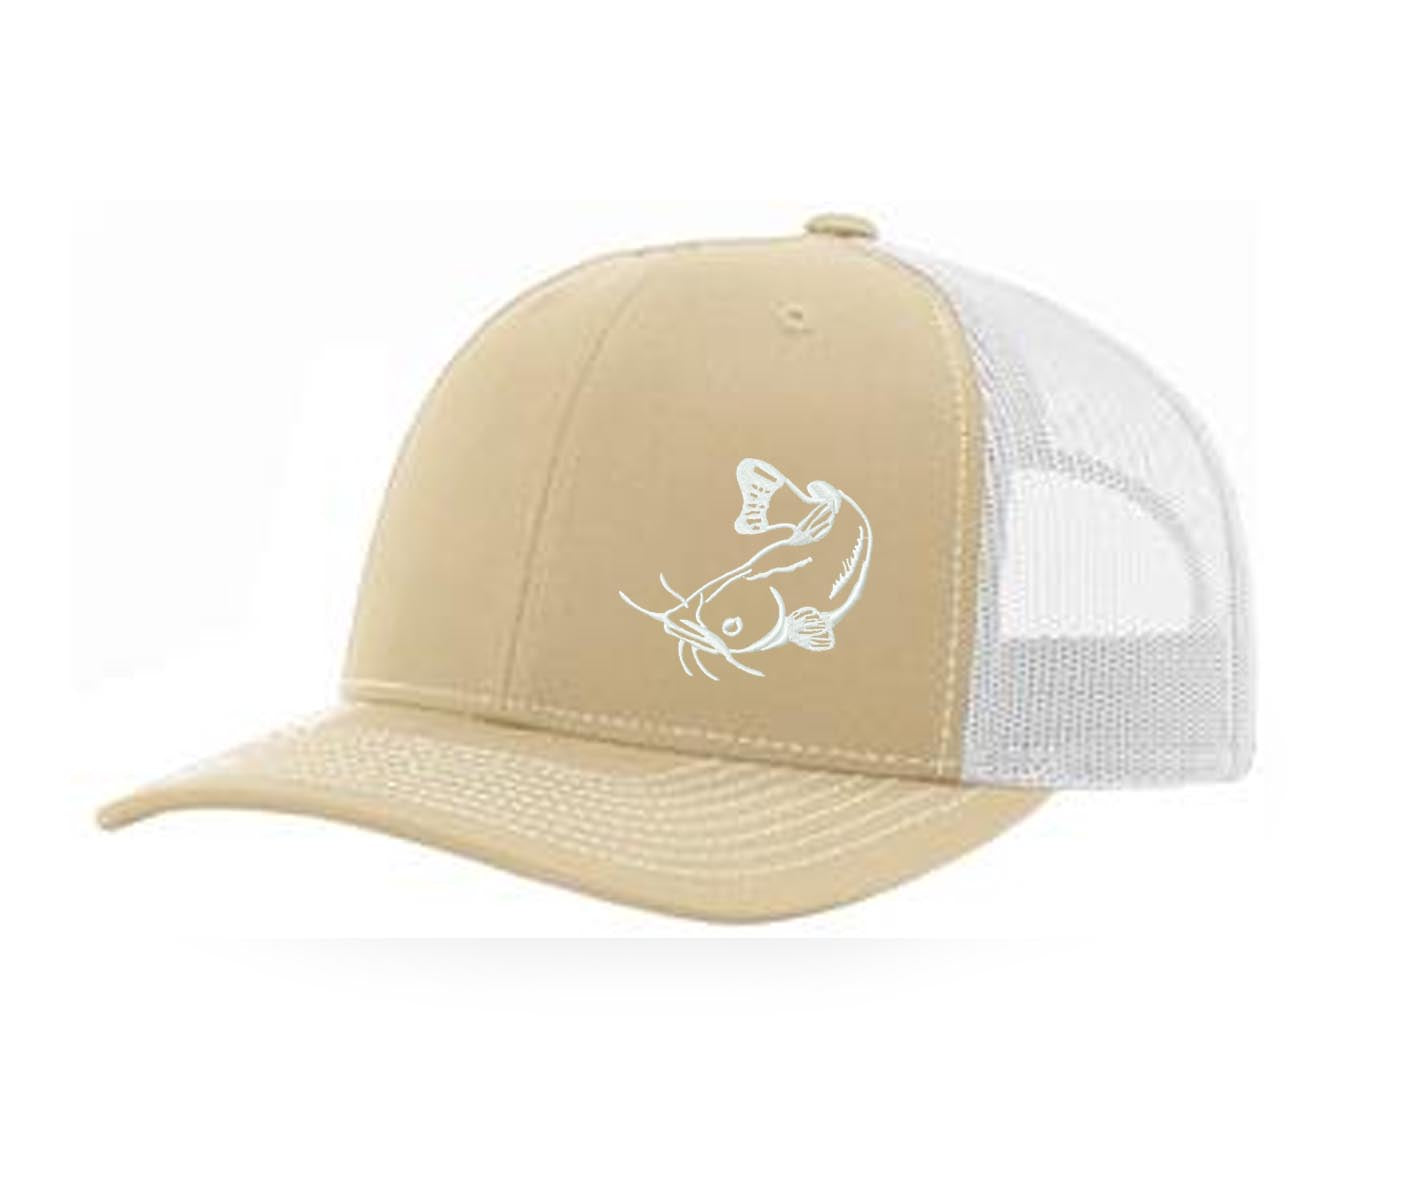 Swamp Cracker Catfish Snapback Hat, Charcoal/White